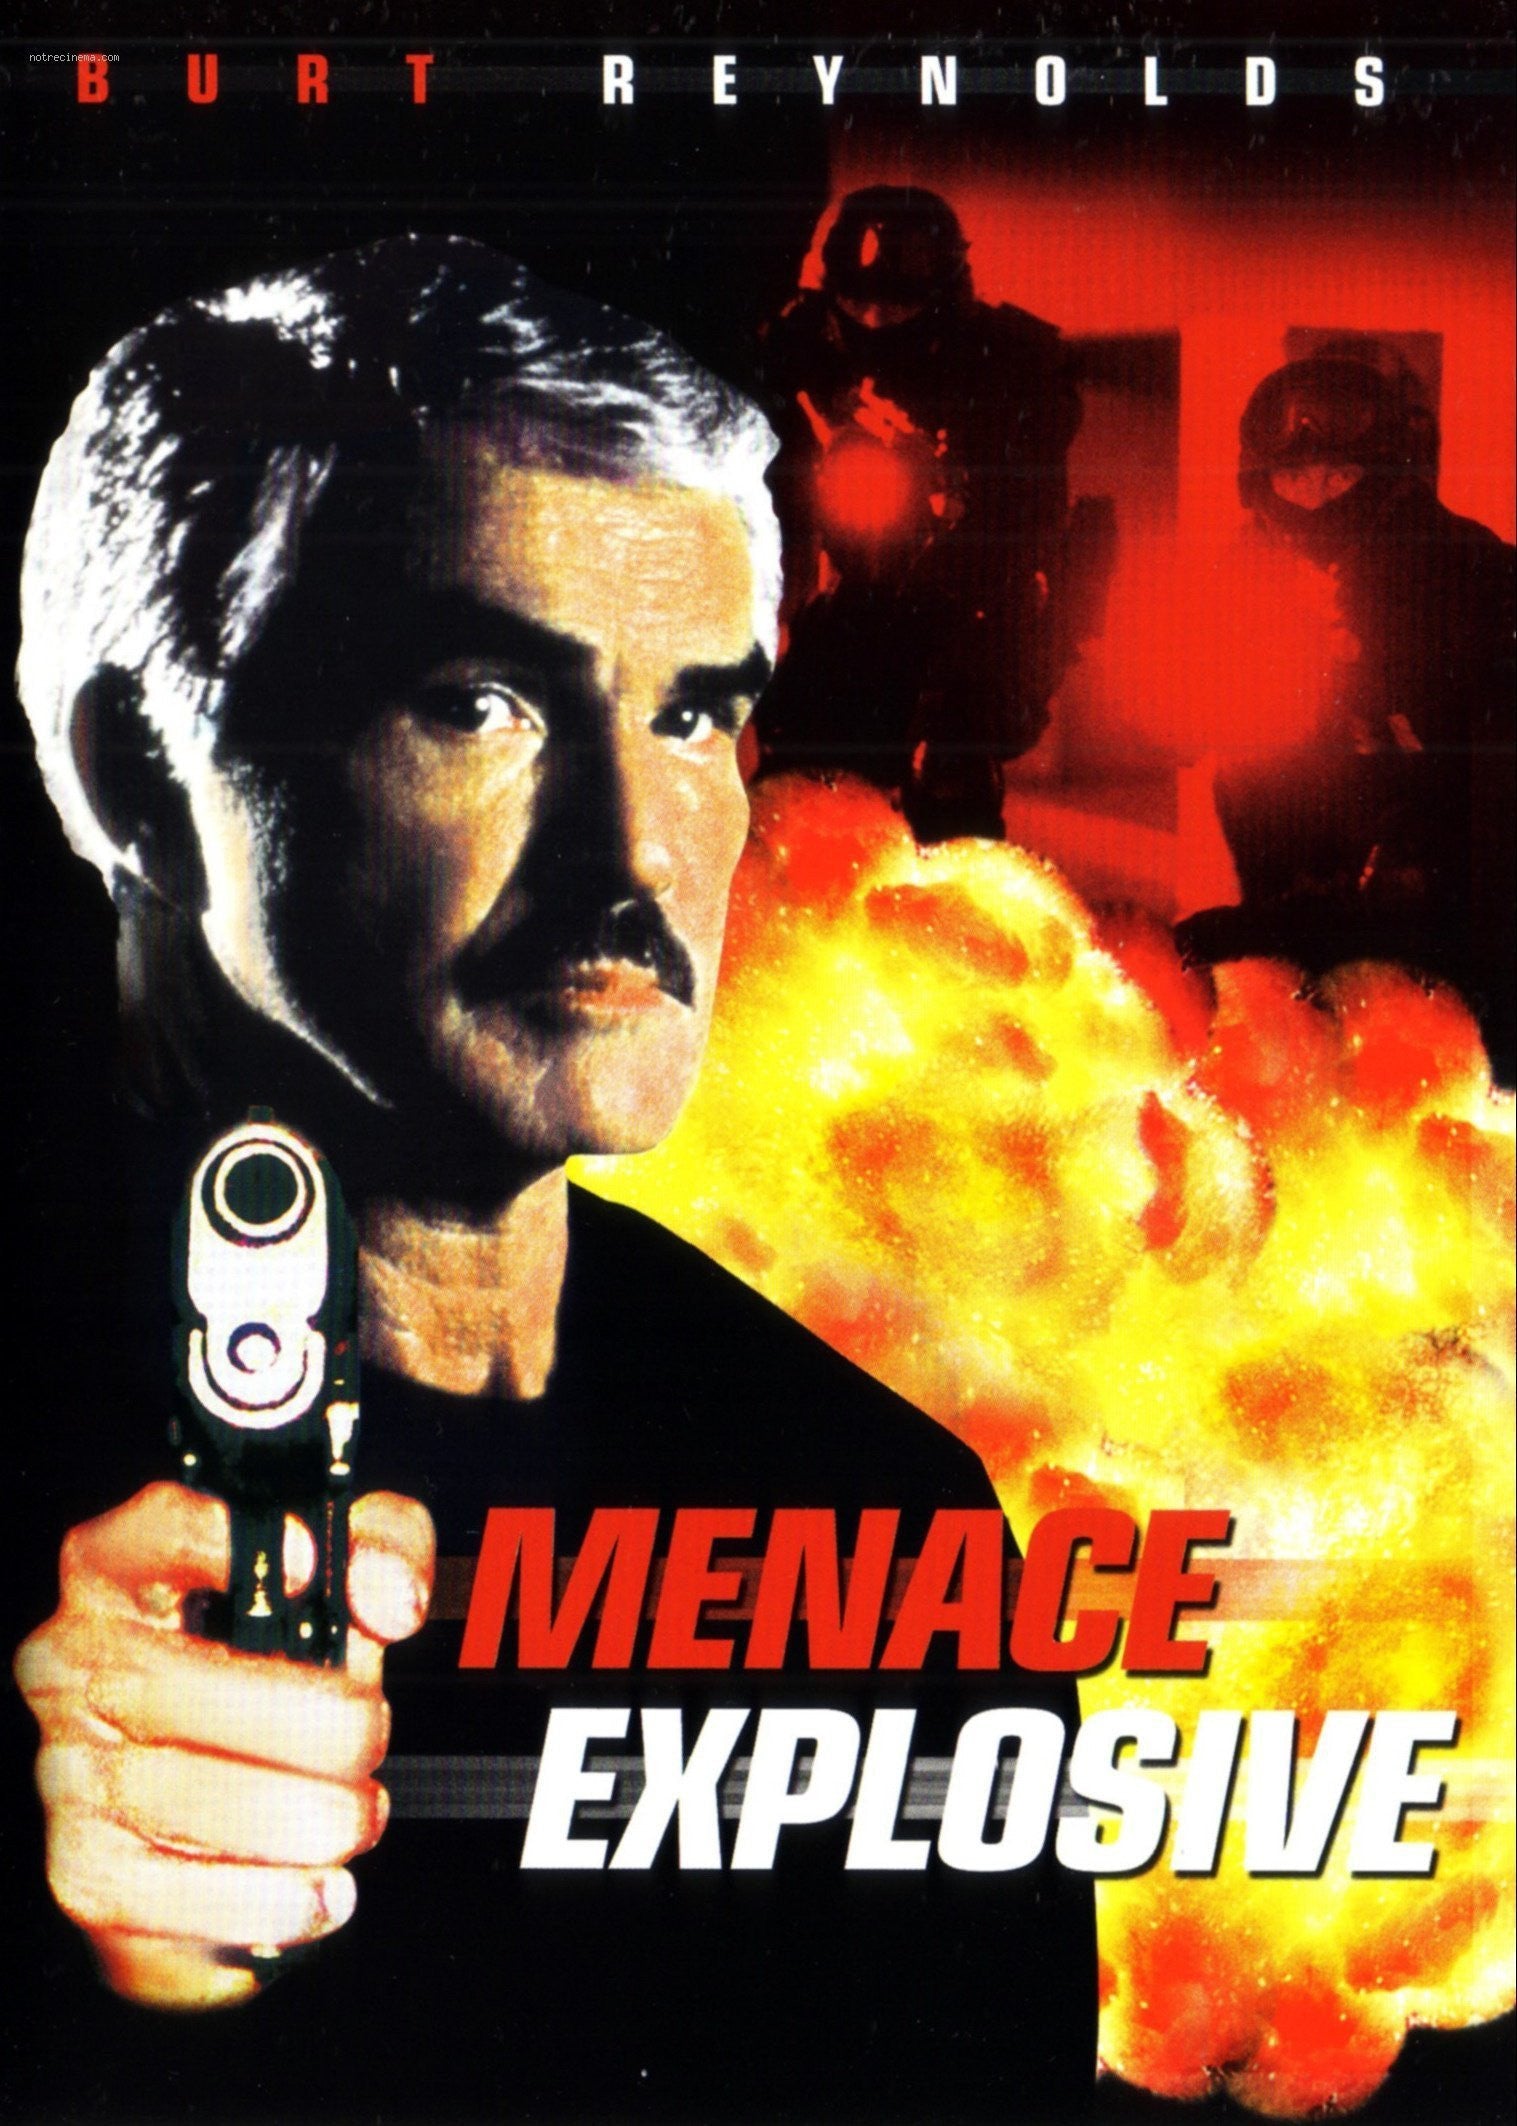 flashvideofilm - Menace explosive (1999) - DVD - DVD